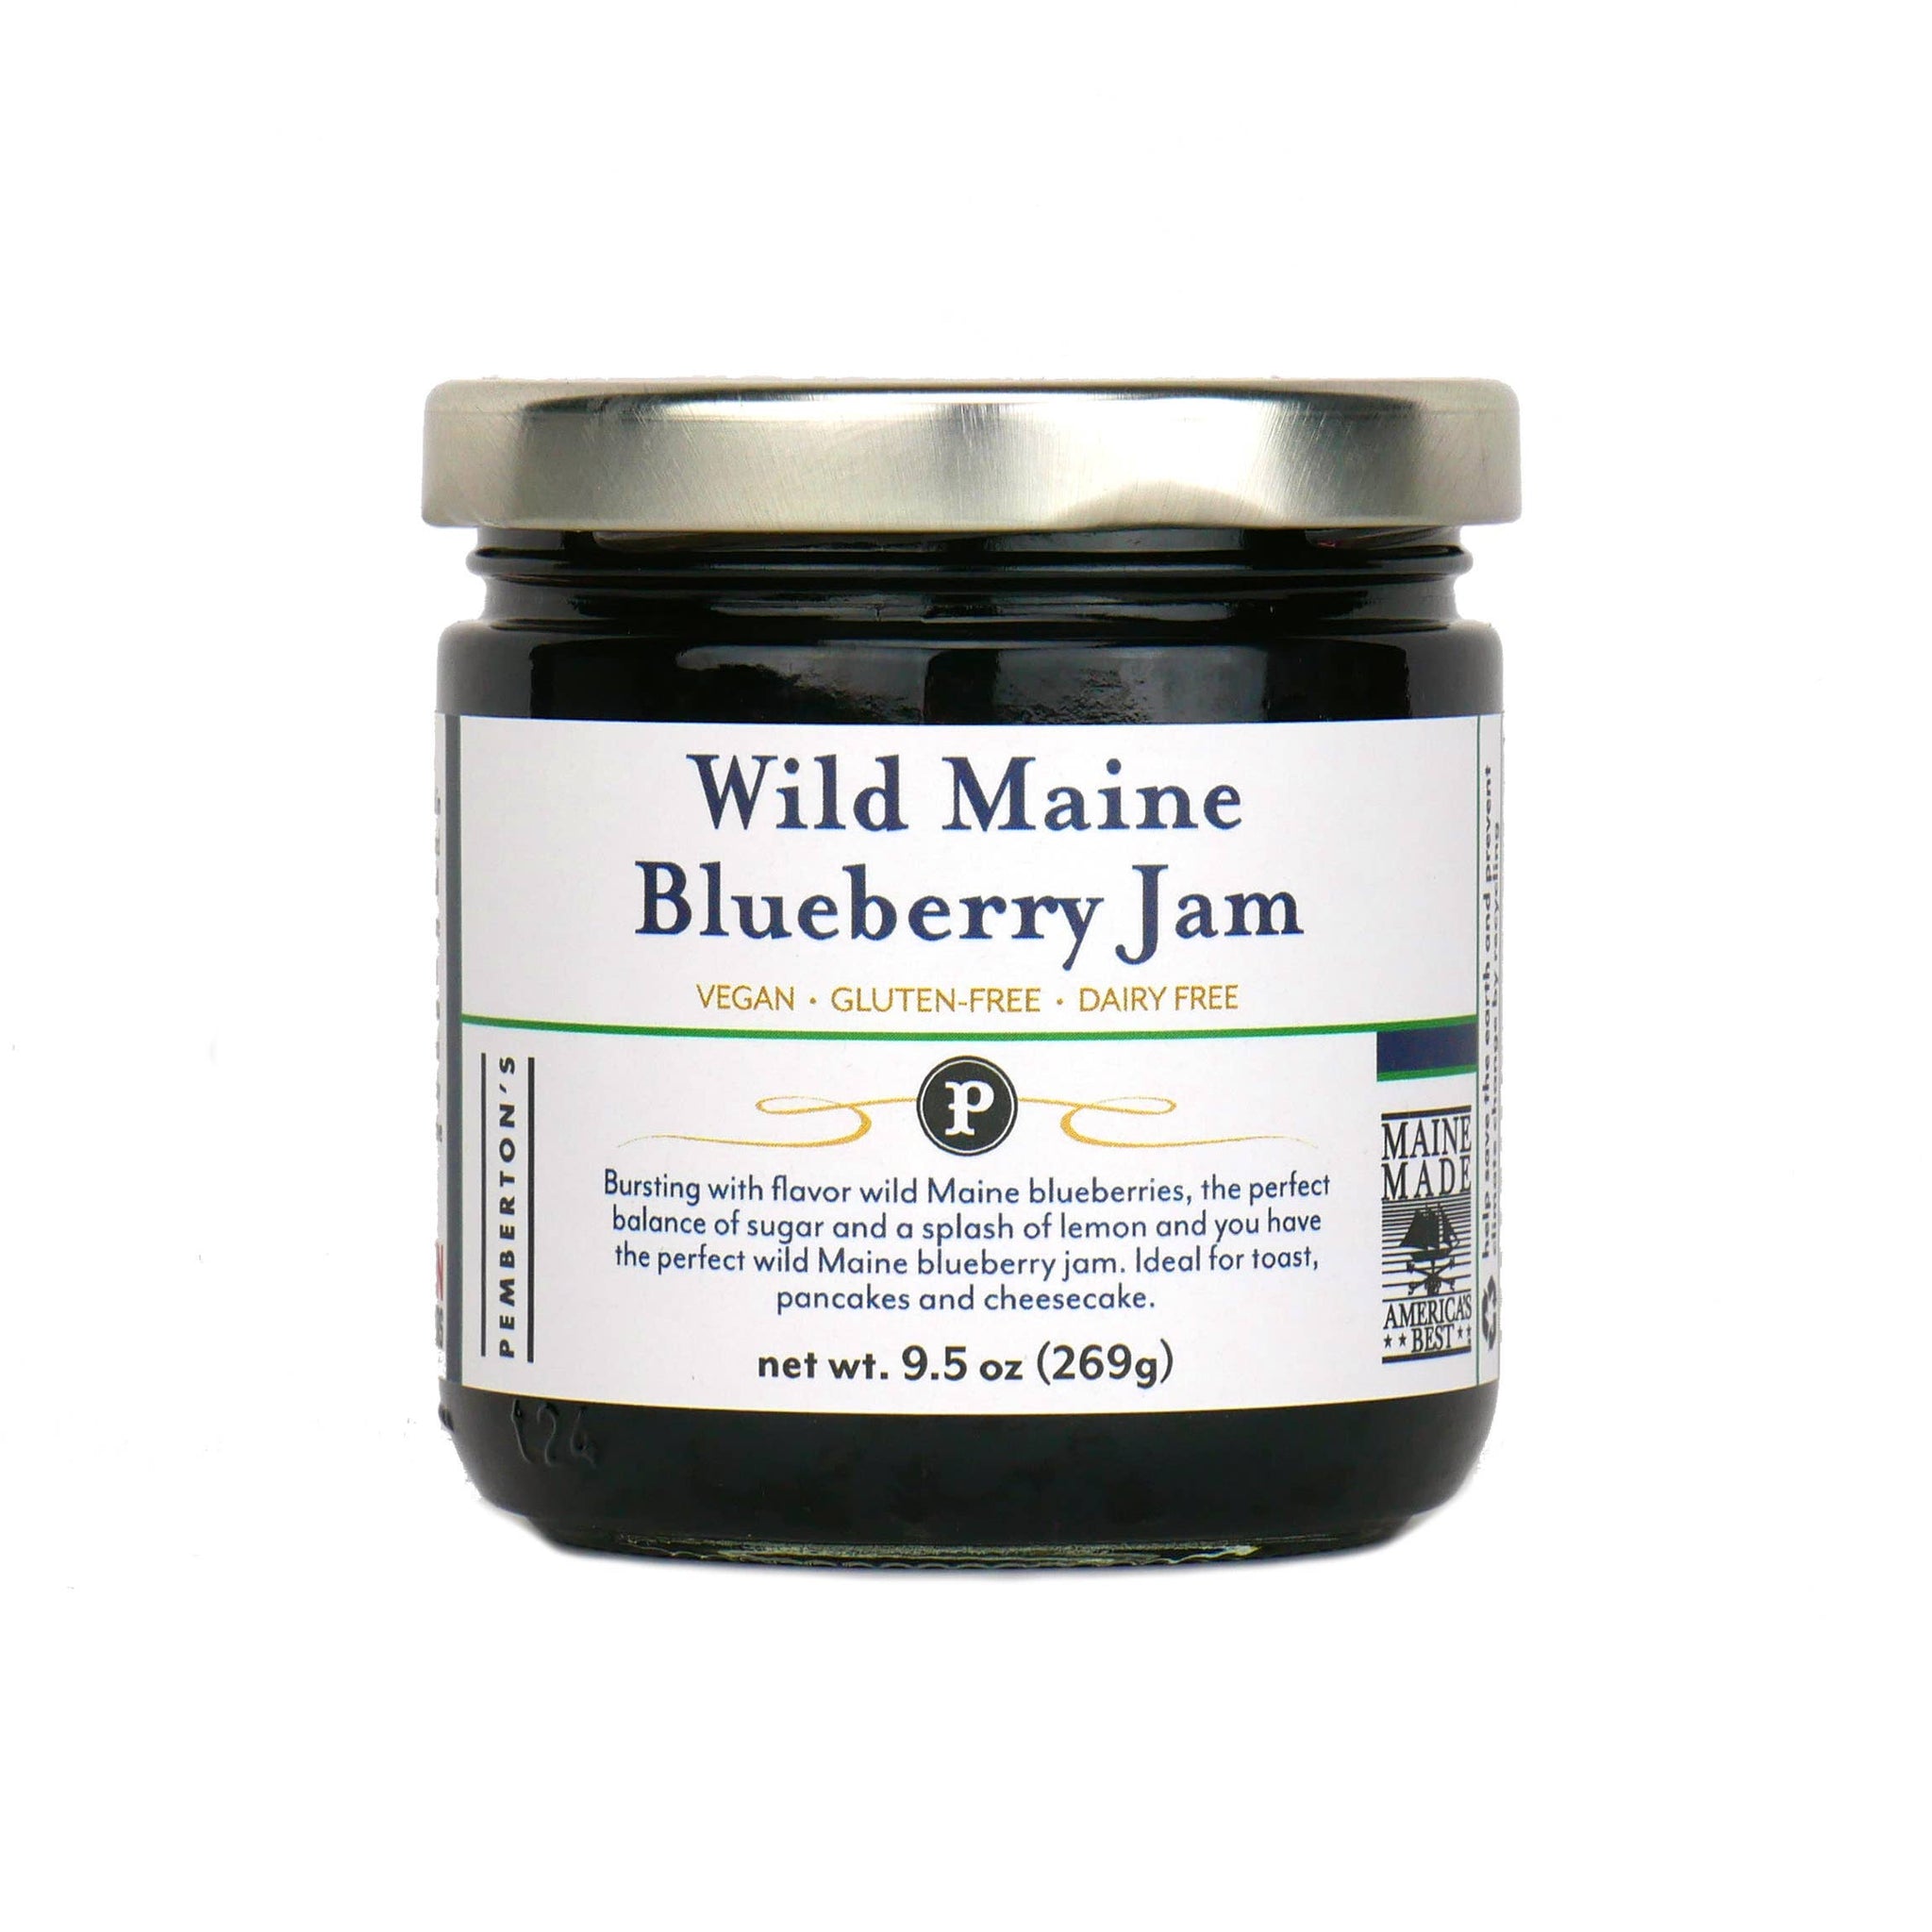 Pemberton's Wild Maine Blueberry Jam